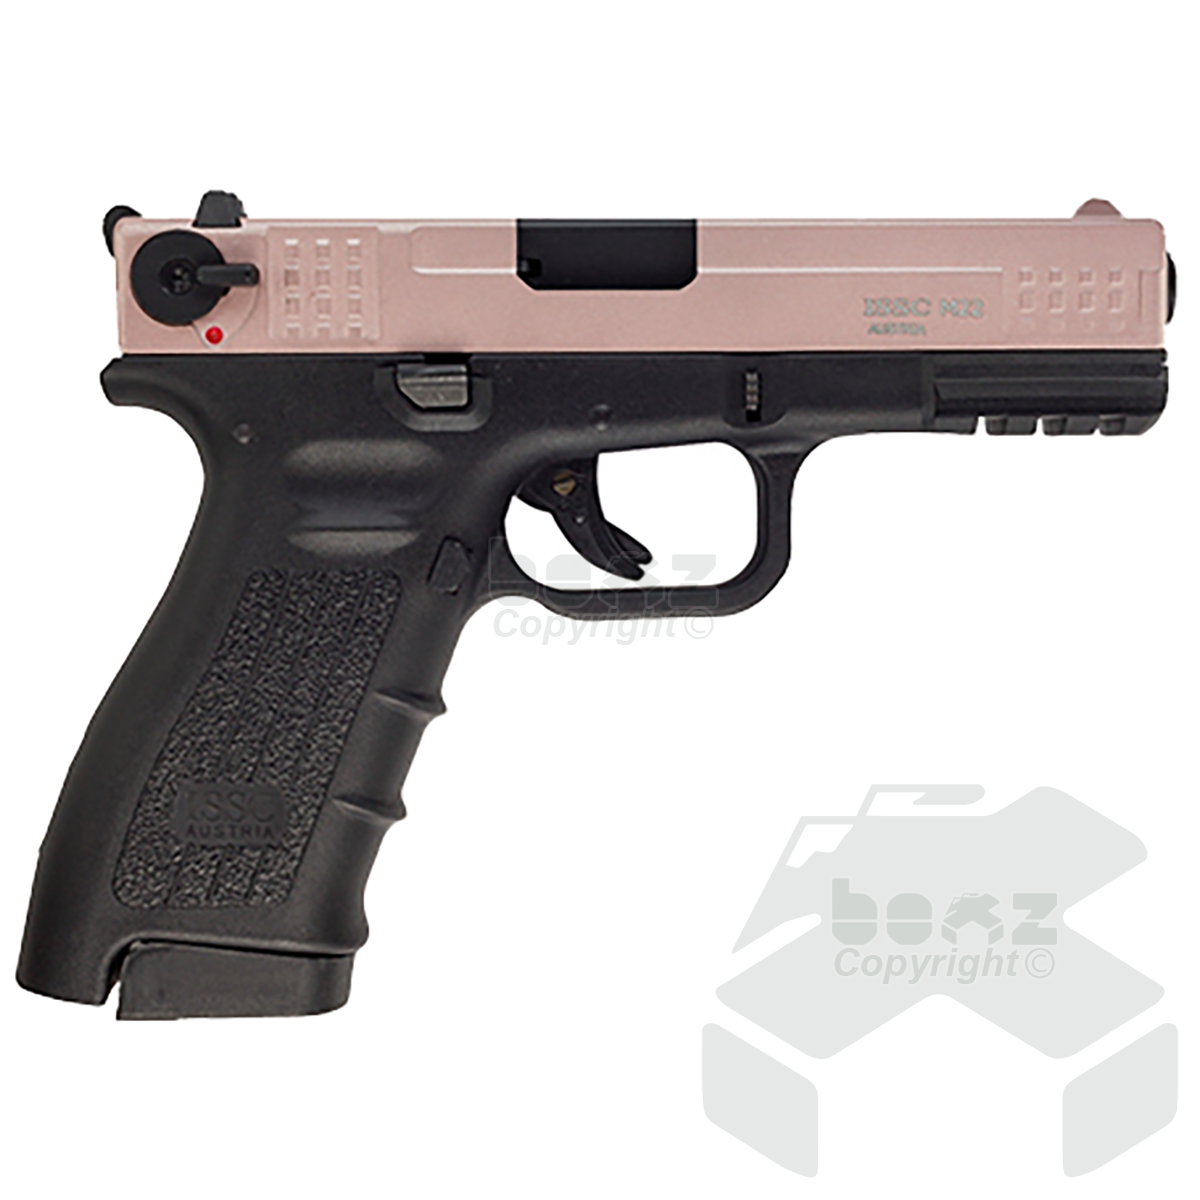 Ceonic M22 Blank Firing Pistol - 9mm - Pink Black